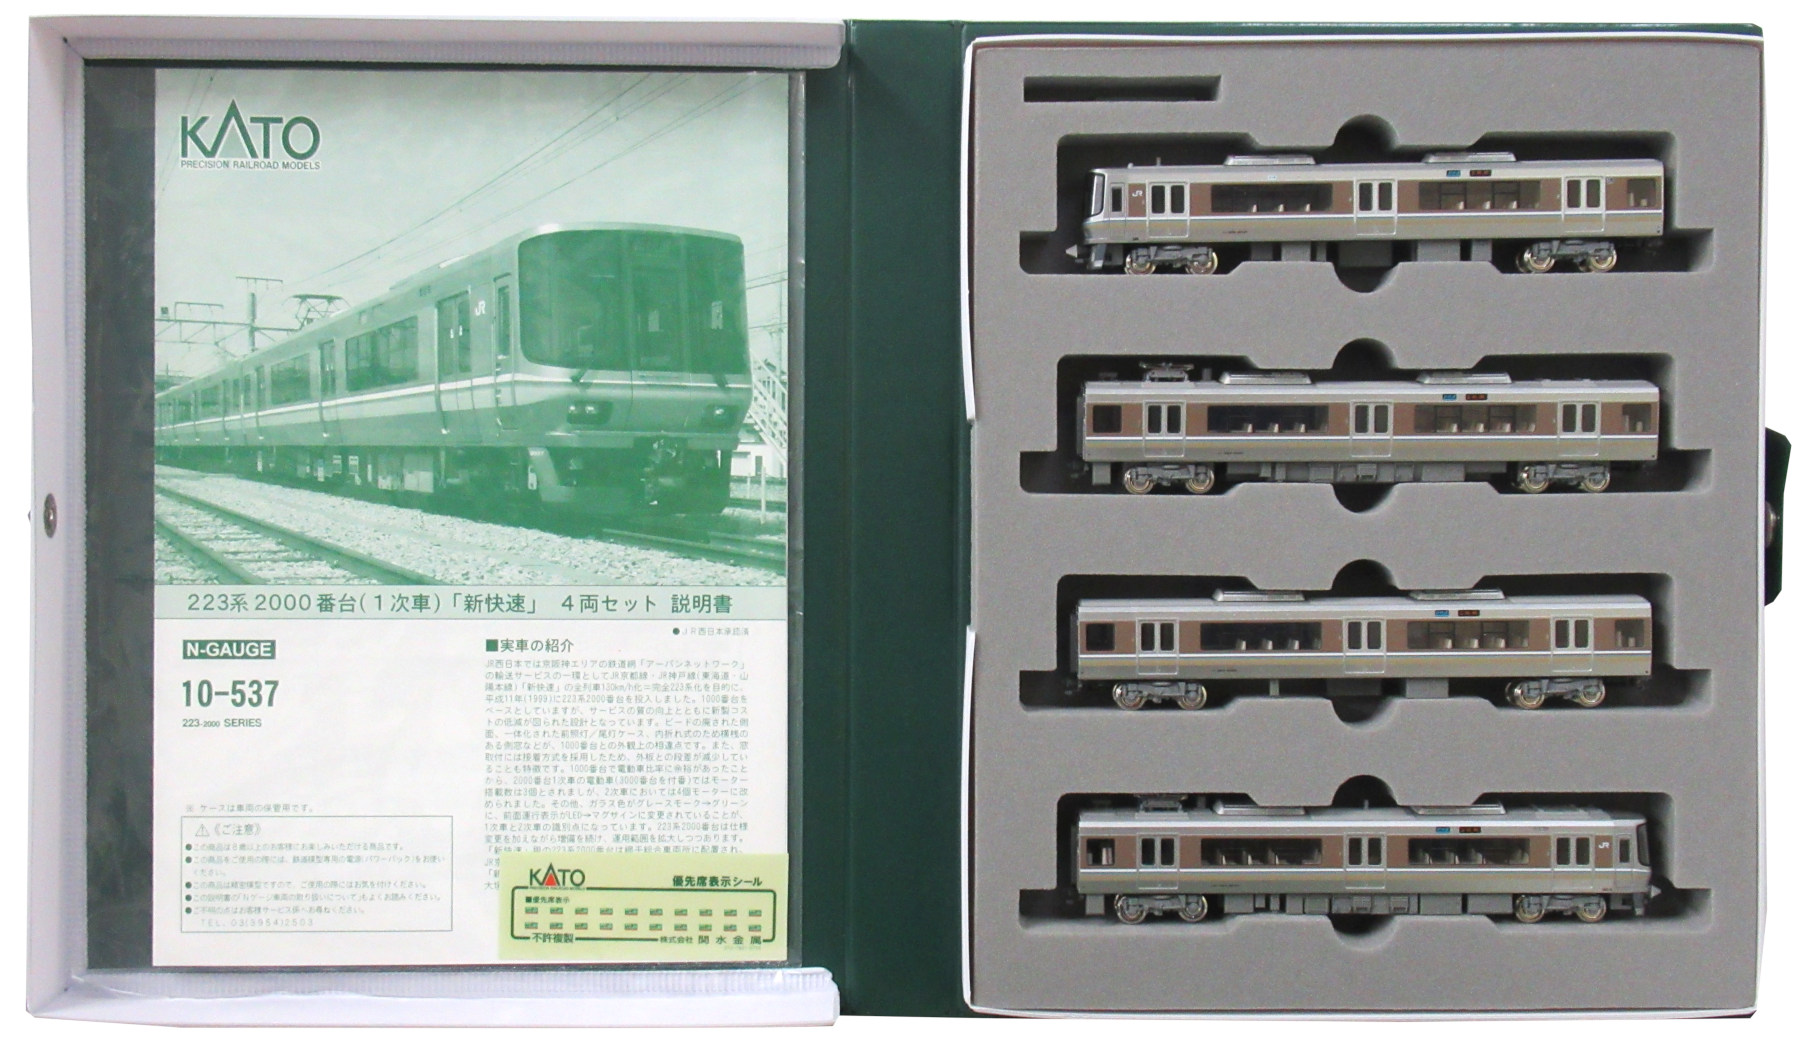 KATO Nゲージ 223系 2000番台 1次車 新快速 4両セット 10-537 鉄道模型 電車